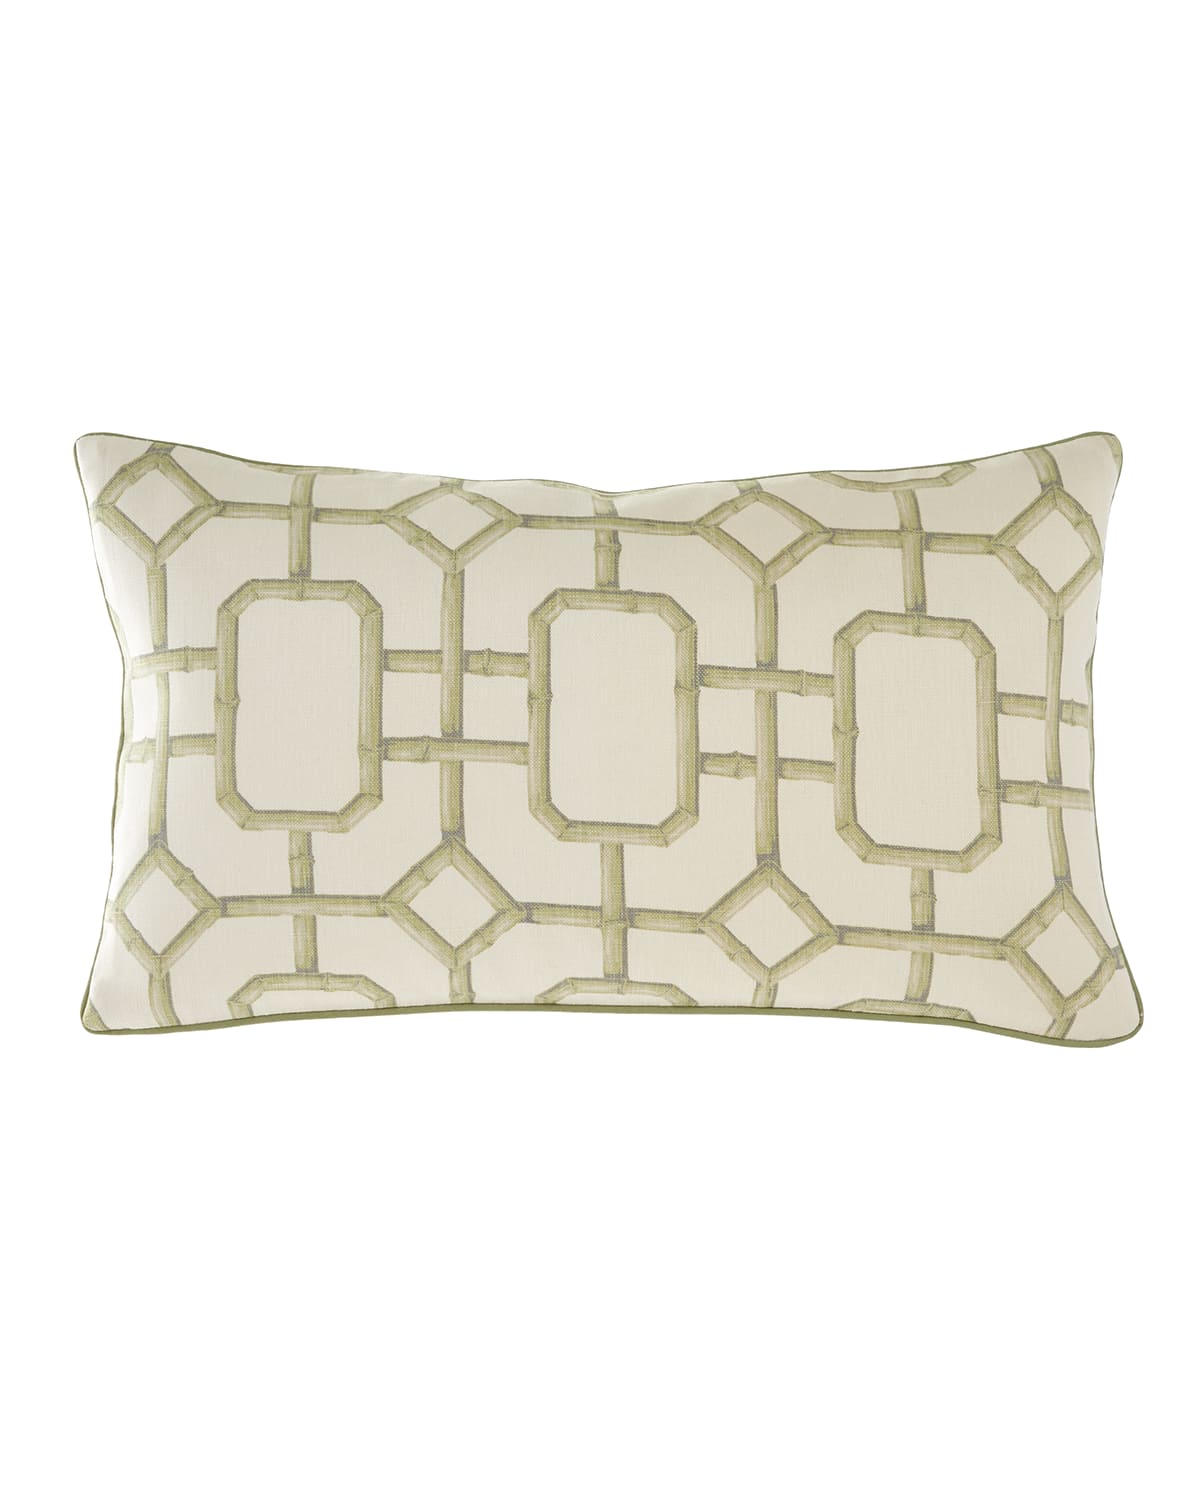 Image Jane Wilner Designs Bamboo Oblong Pillow